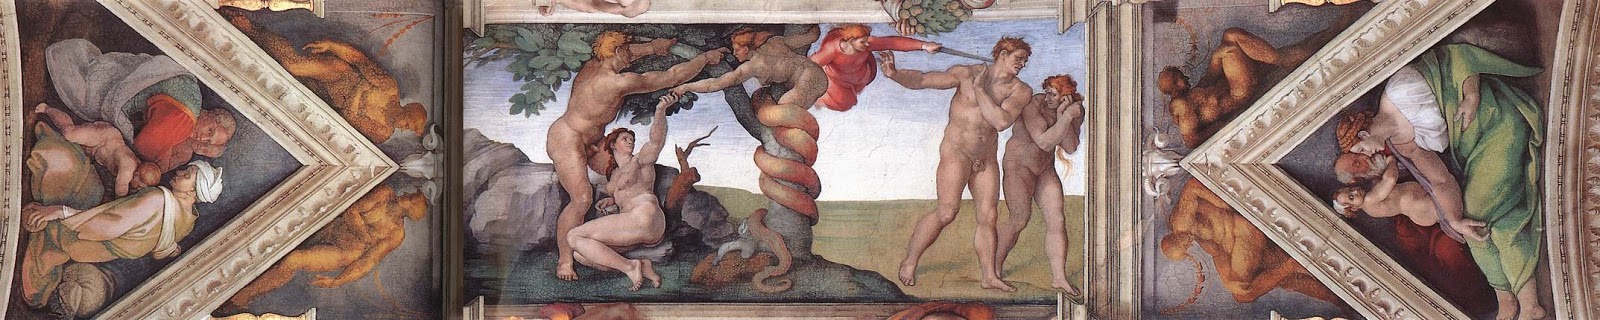 Michelangelo+Buonarroti-1475-1564 (375).jpg